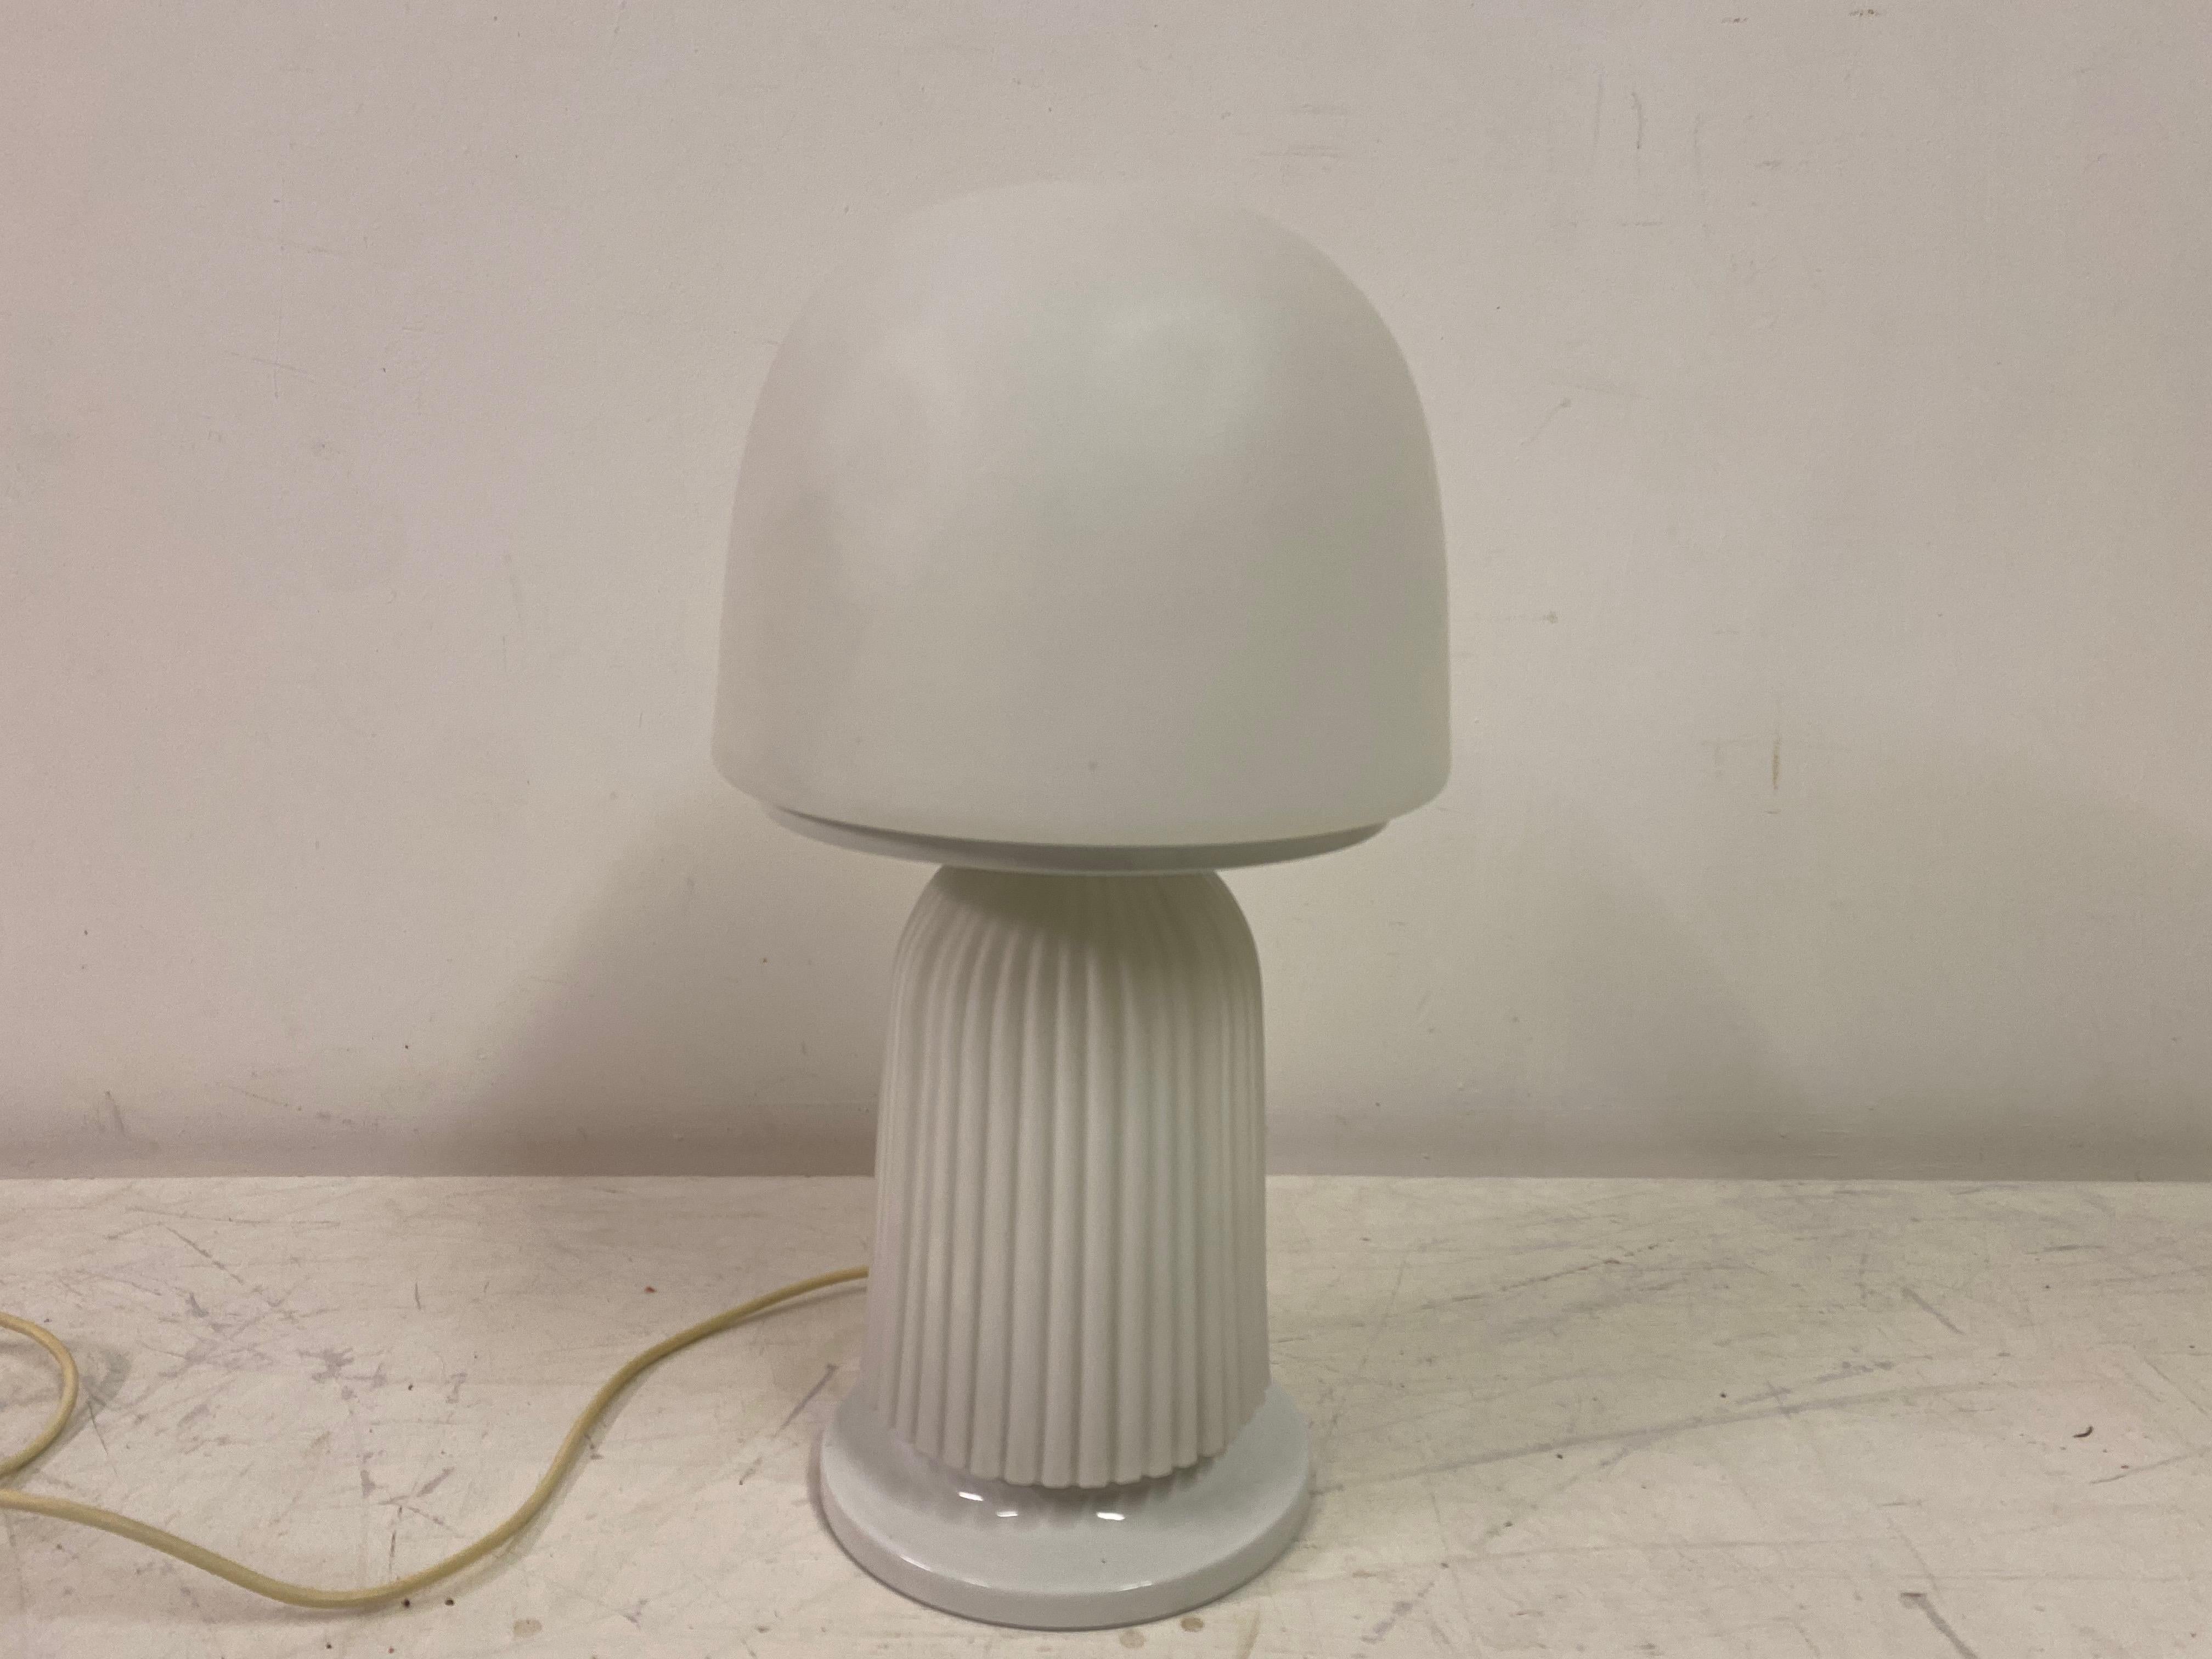 Mushroom lamp

White glass

Ribbed body

White painted metal base

Italy 1970s.